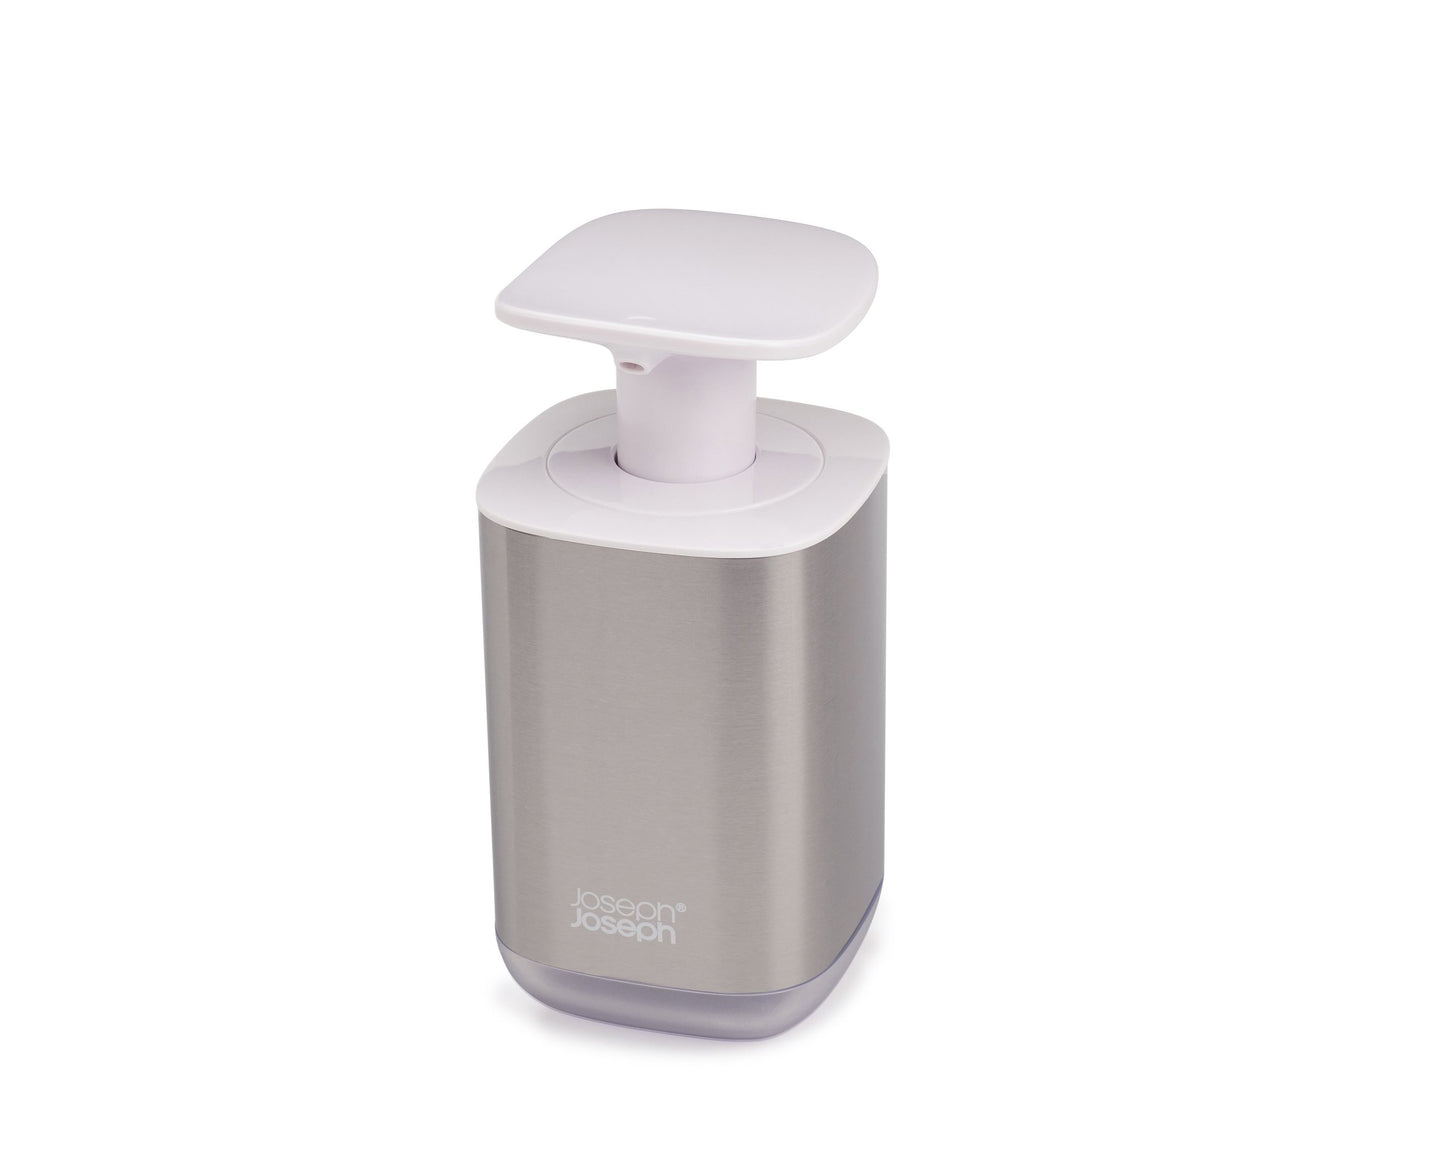 Joseph Joseph Presto™ Steel Hygienic Soap Dispenser